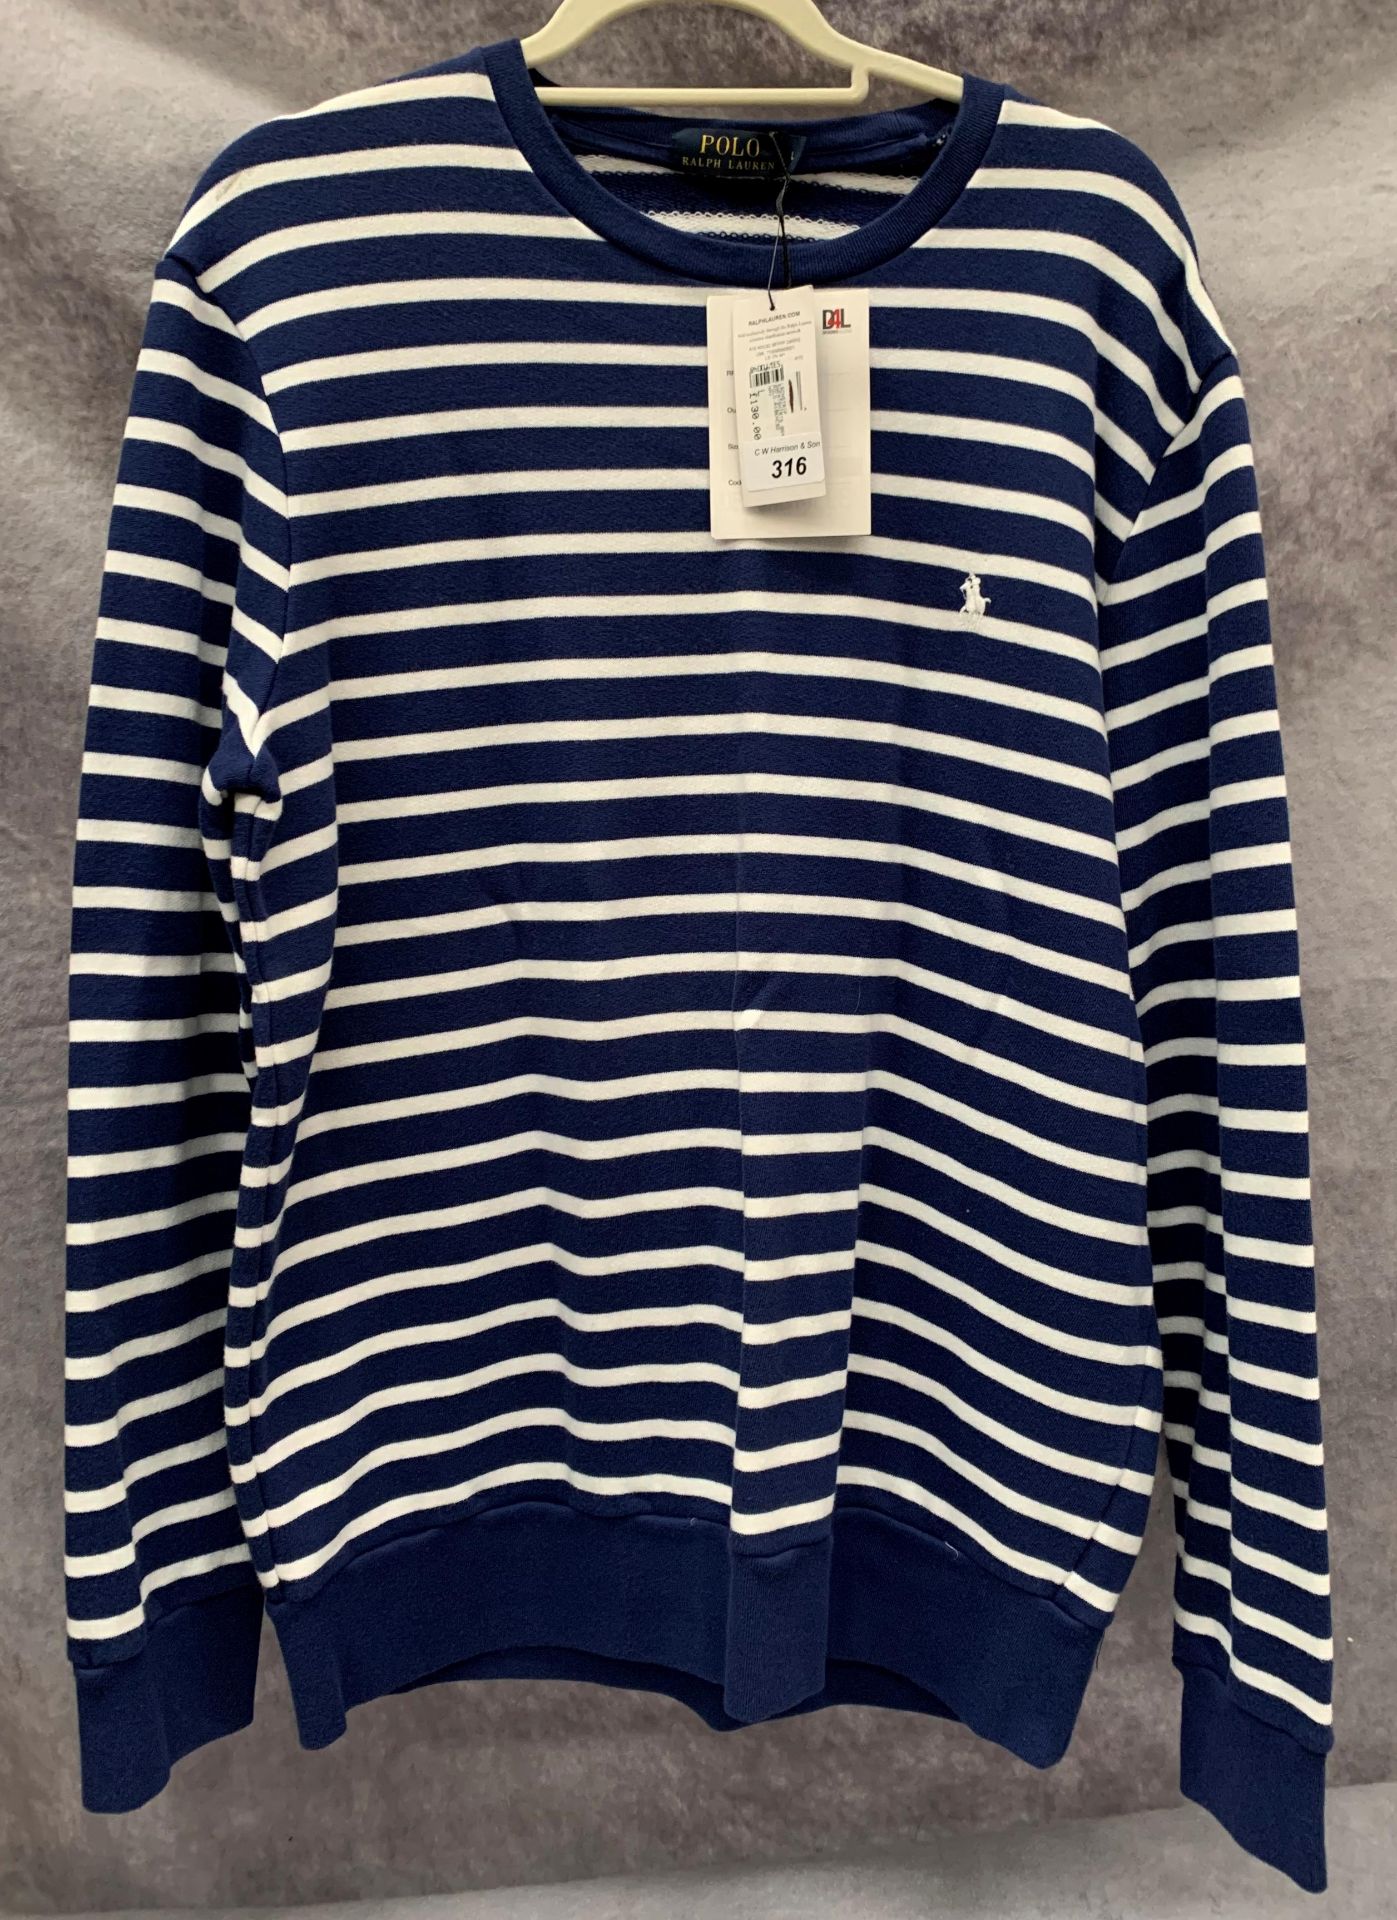 A polo Ralph Lauren men's sweatshirt, blue striped, size L,